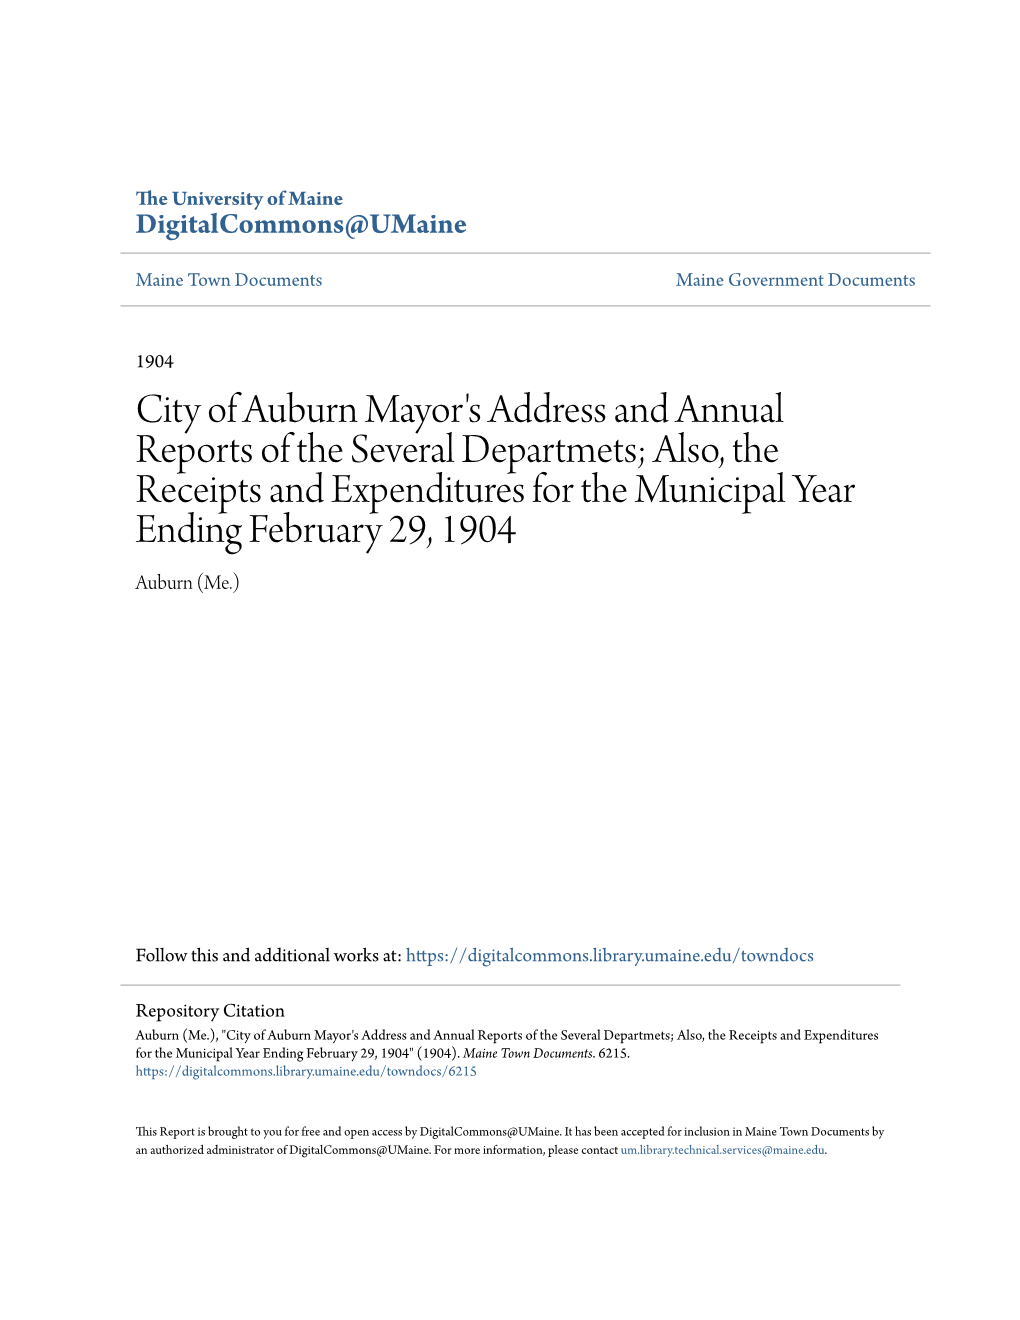 City of Auburn Mayor's Address and Annual